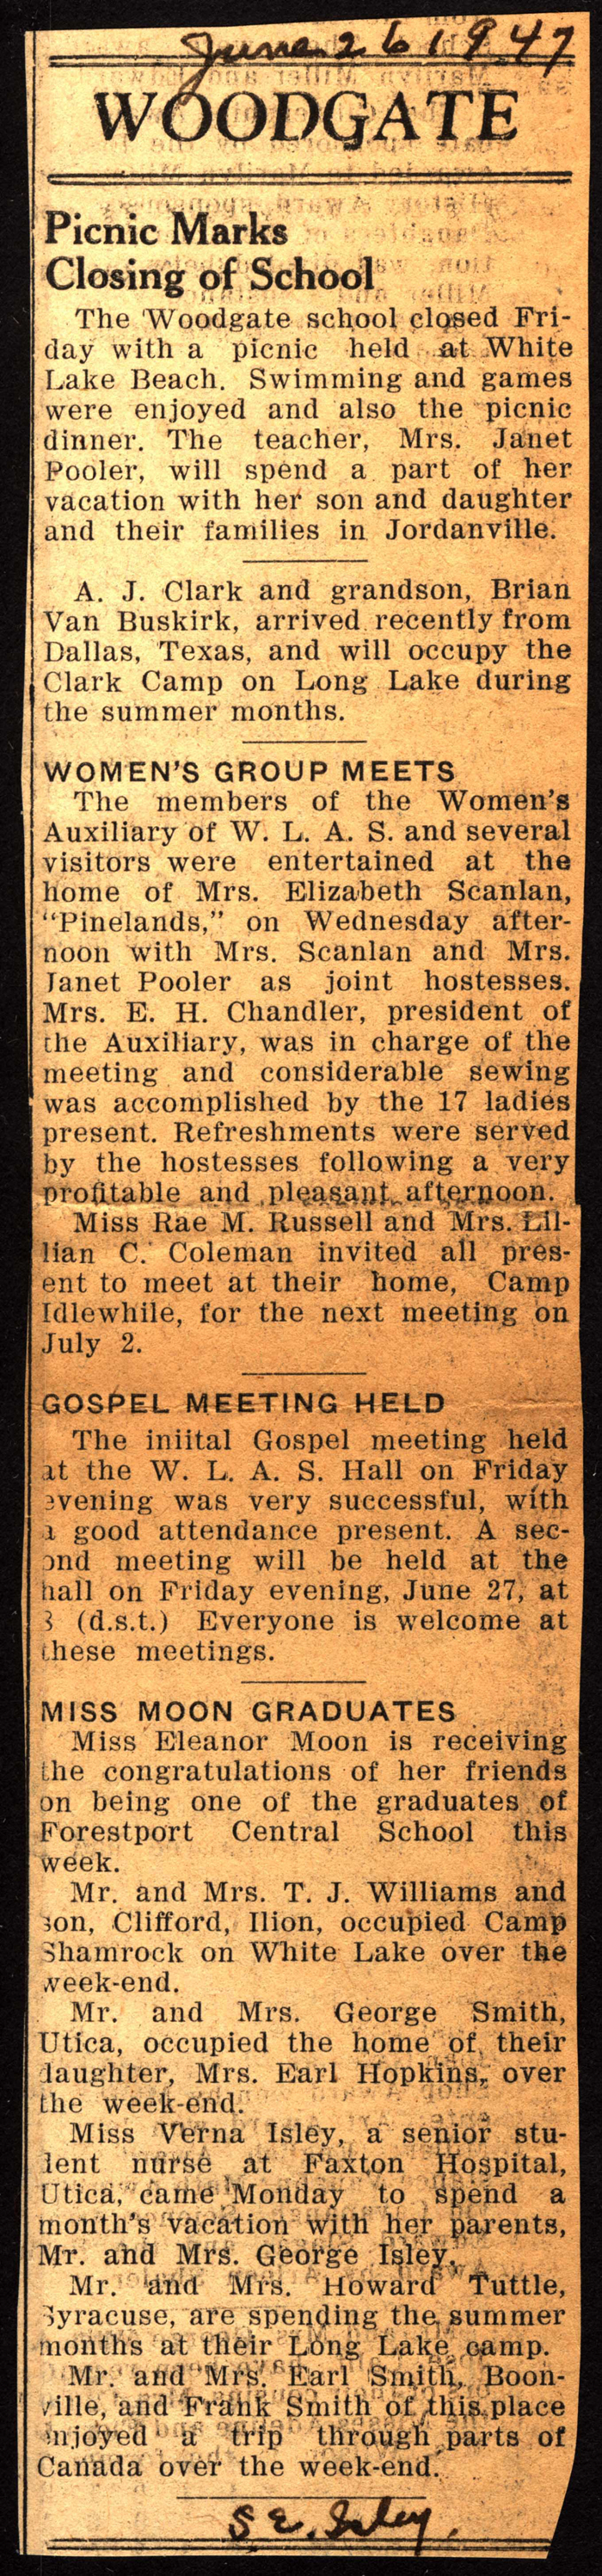 woodgate news june 26 1947